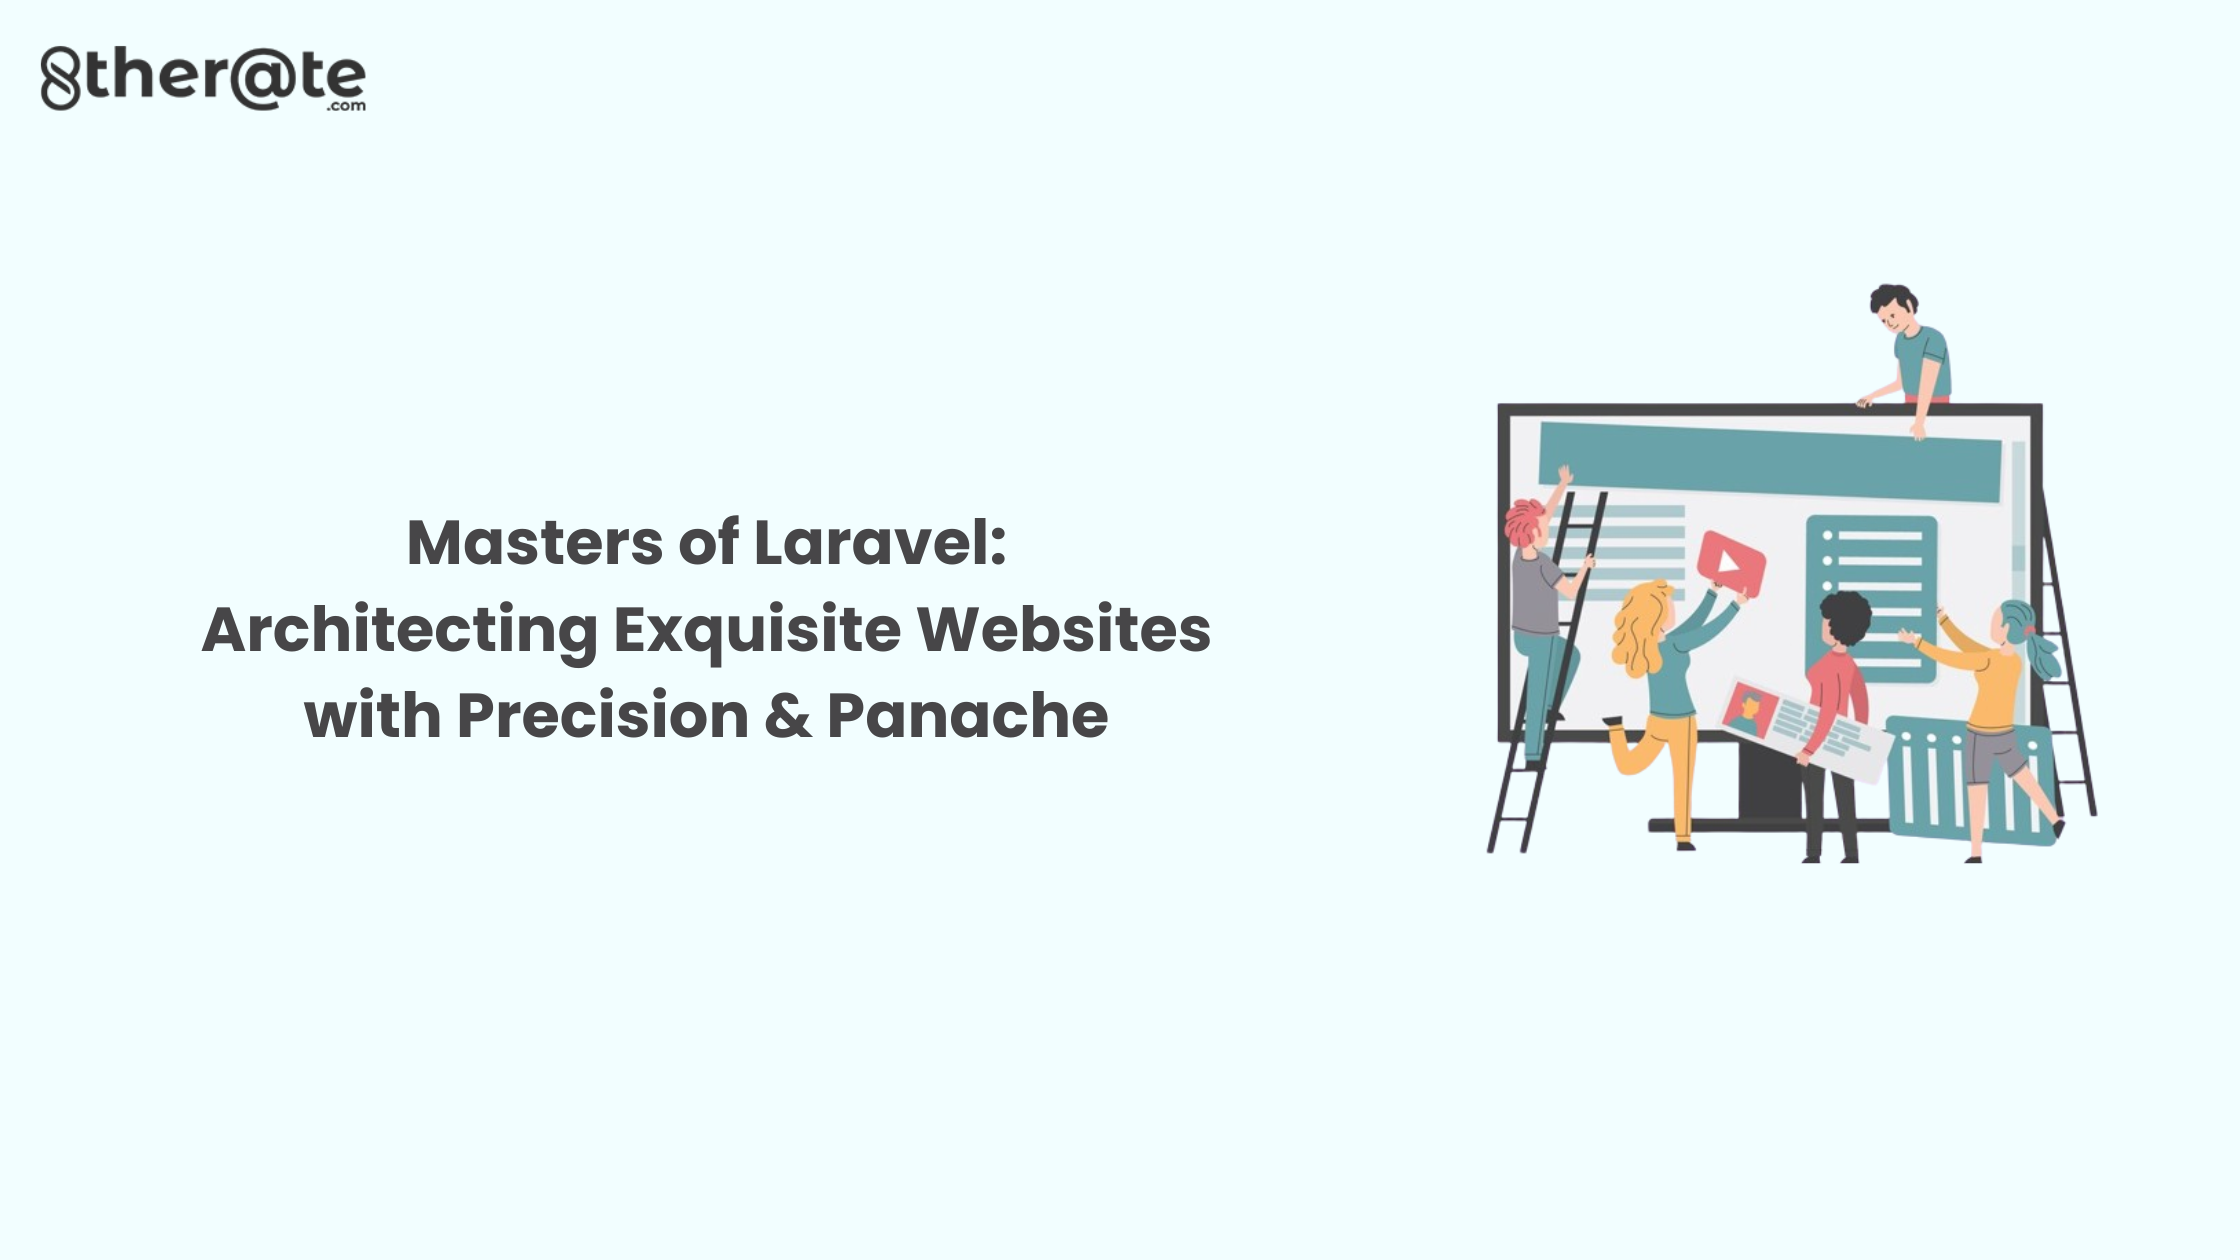 Laravel: Architecting Websites with Precision &Panache